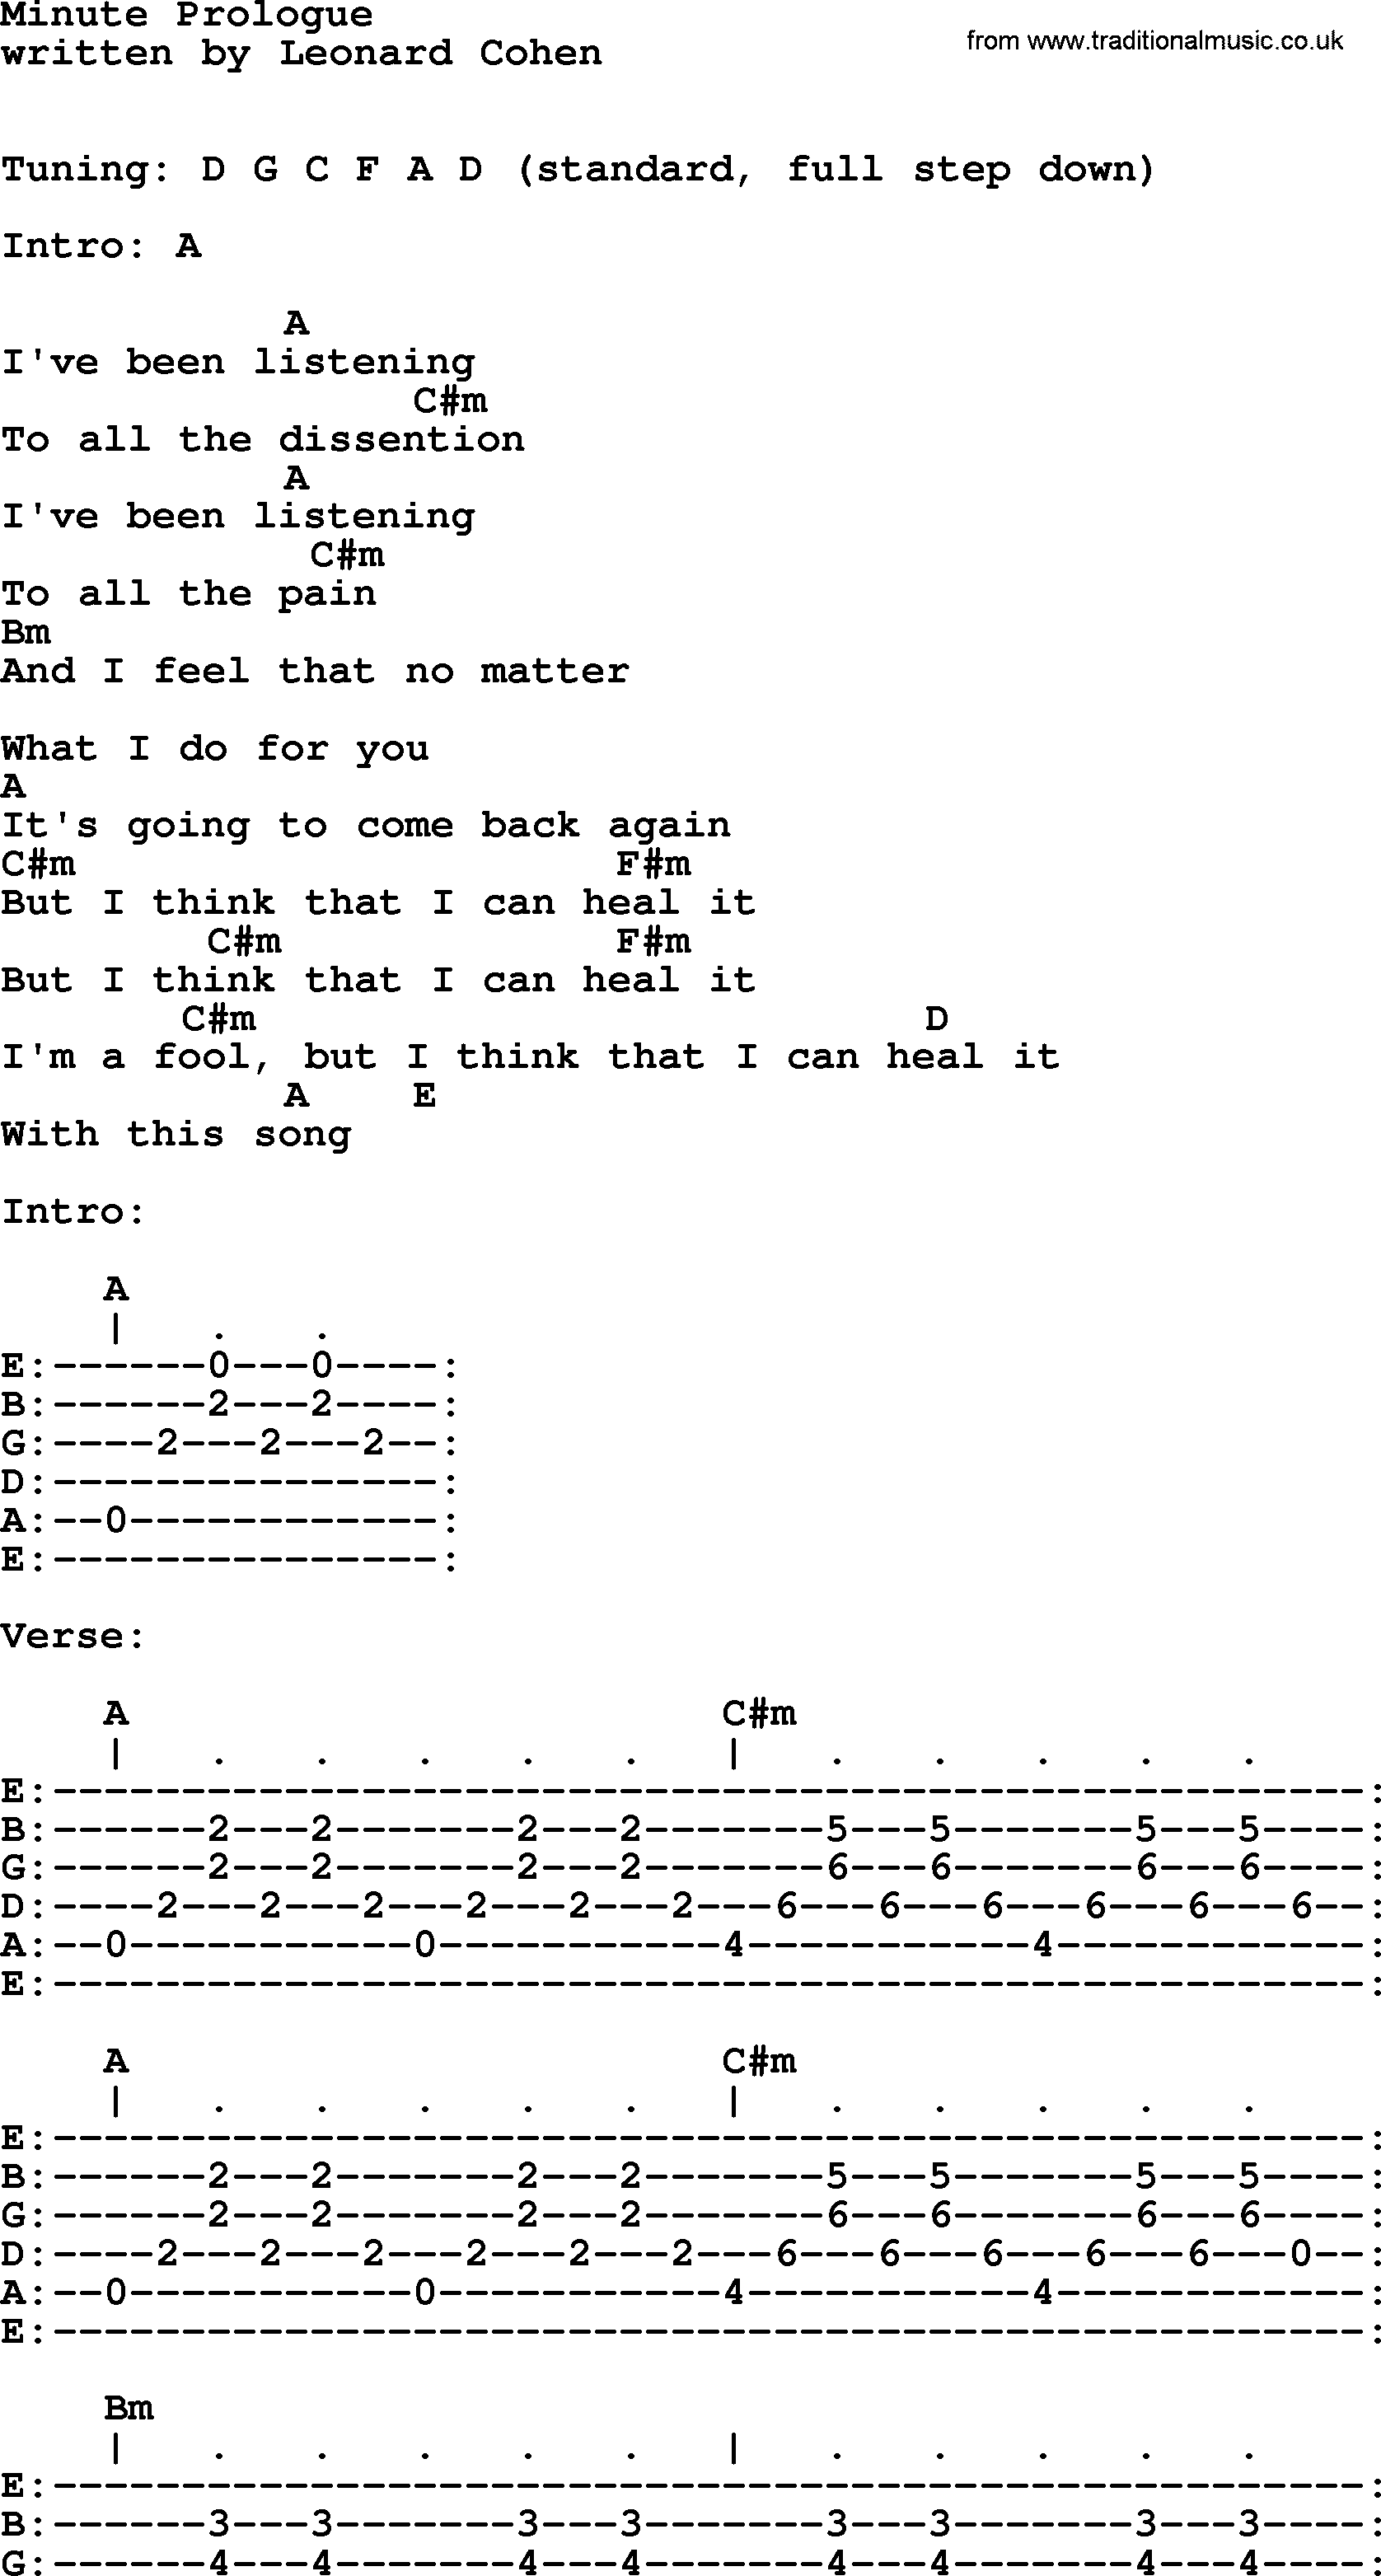 Leonard Cohen song Minute Prologue, lyrics and chords